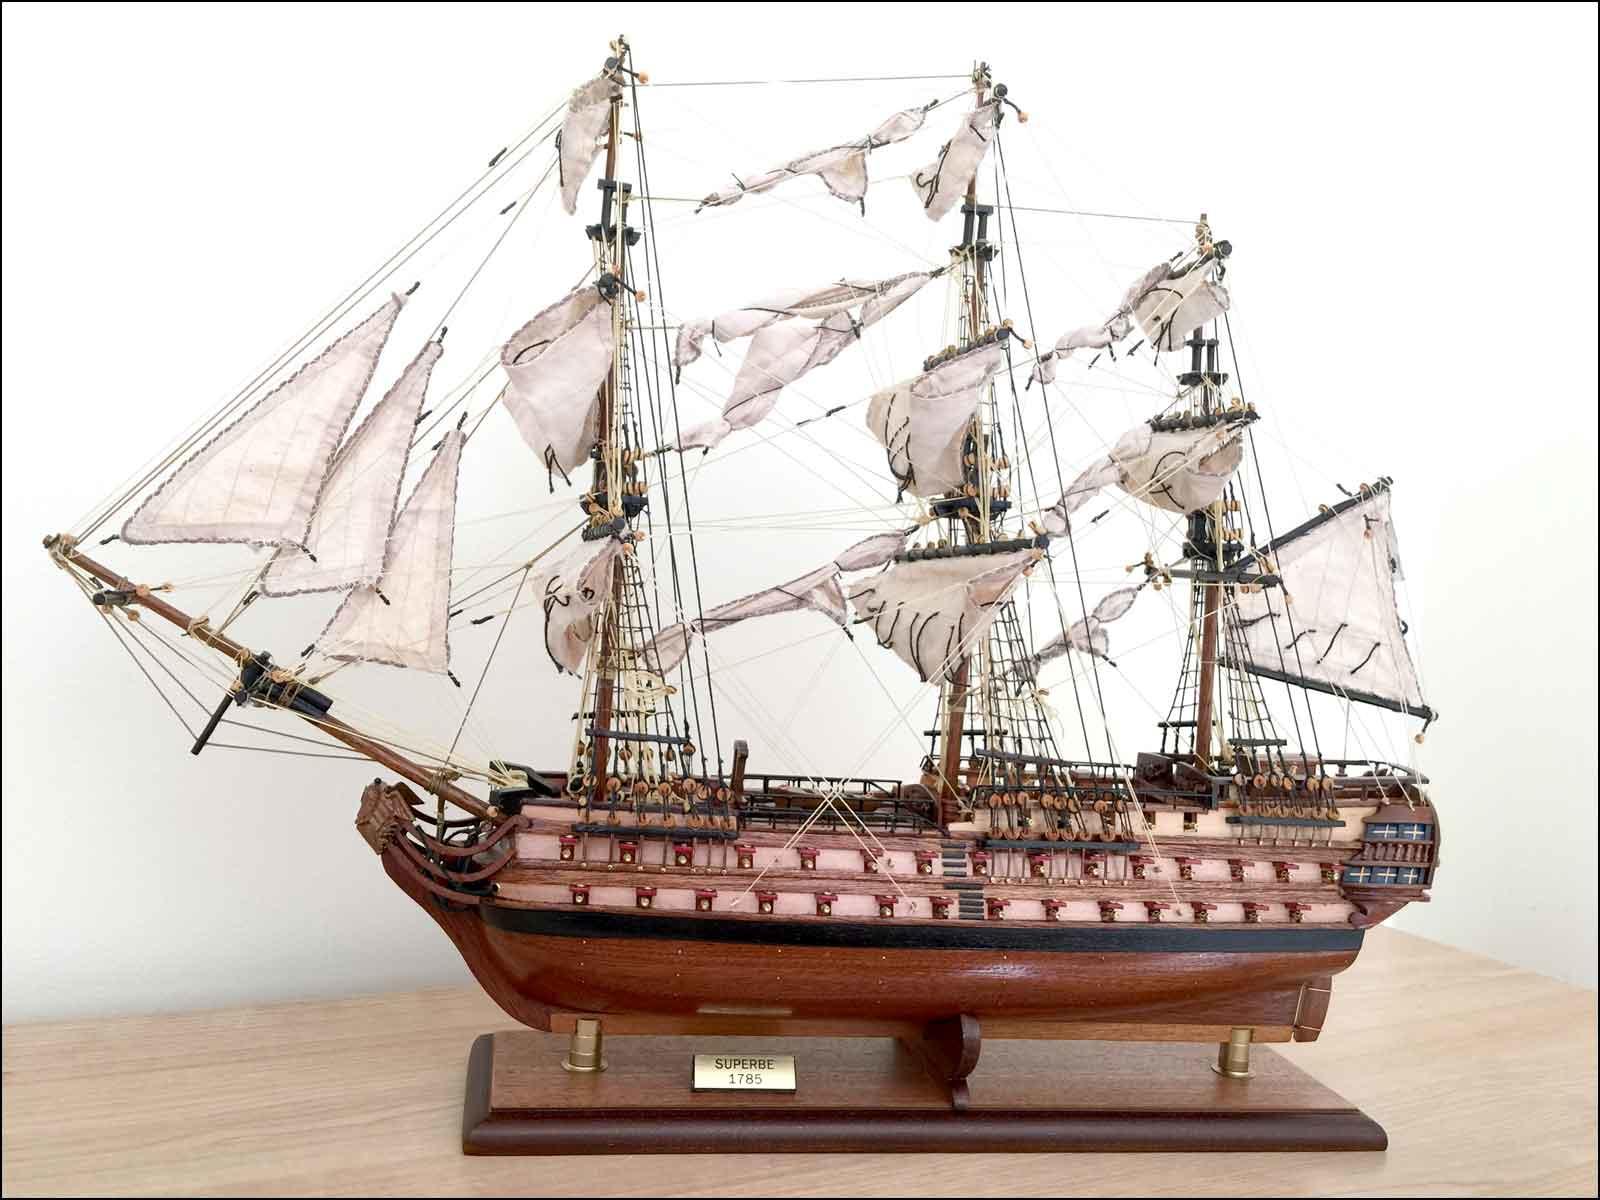 Le Superbe model ship